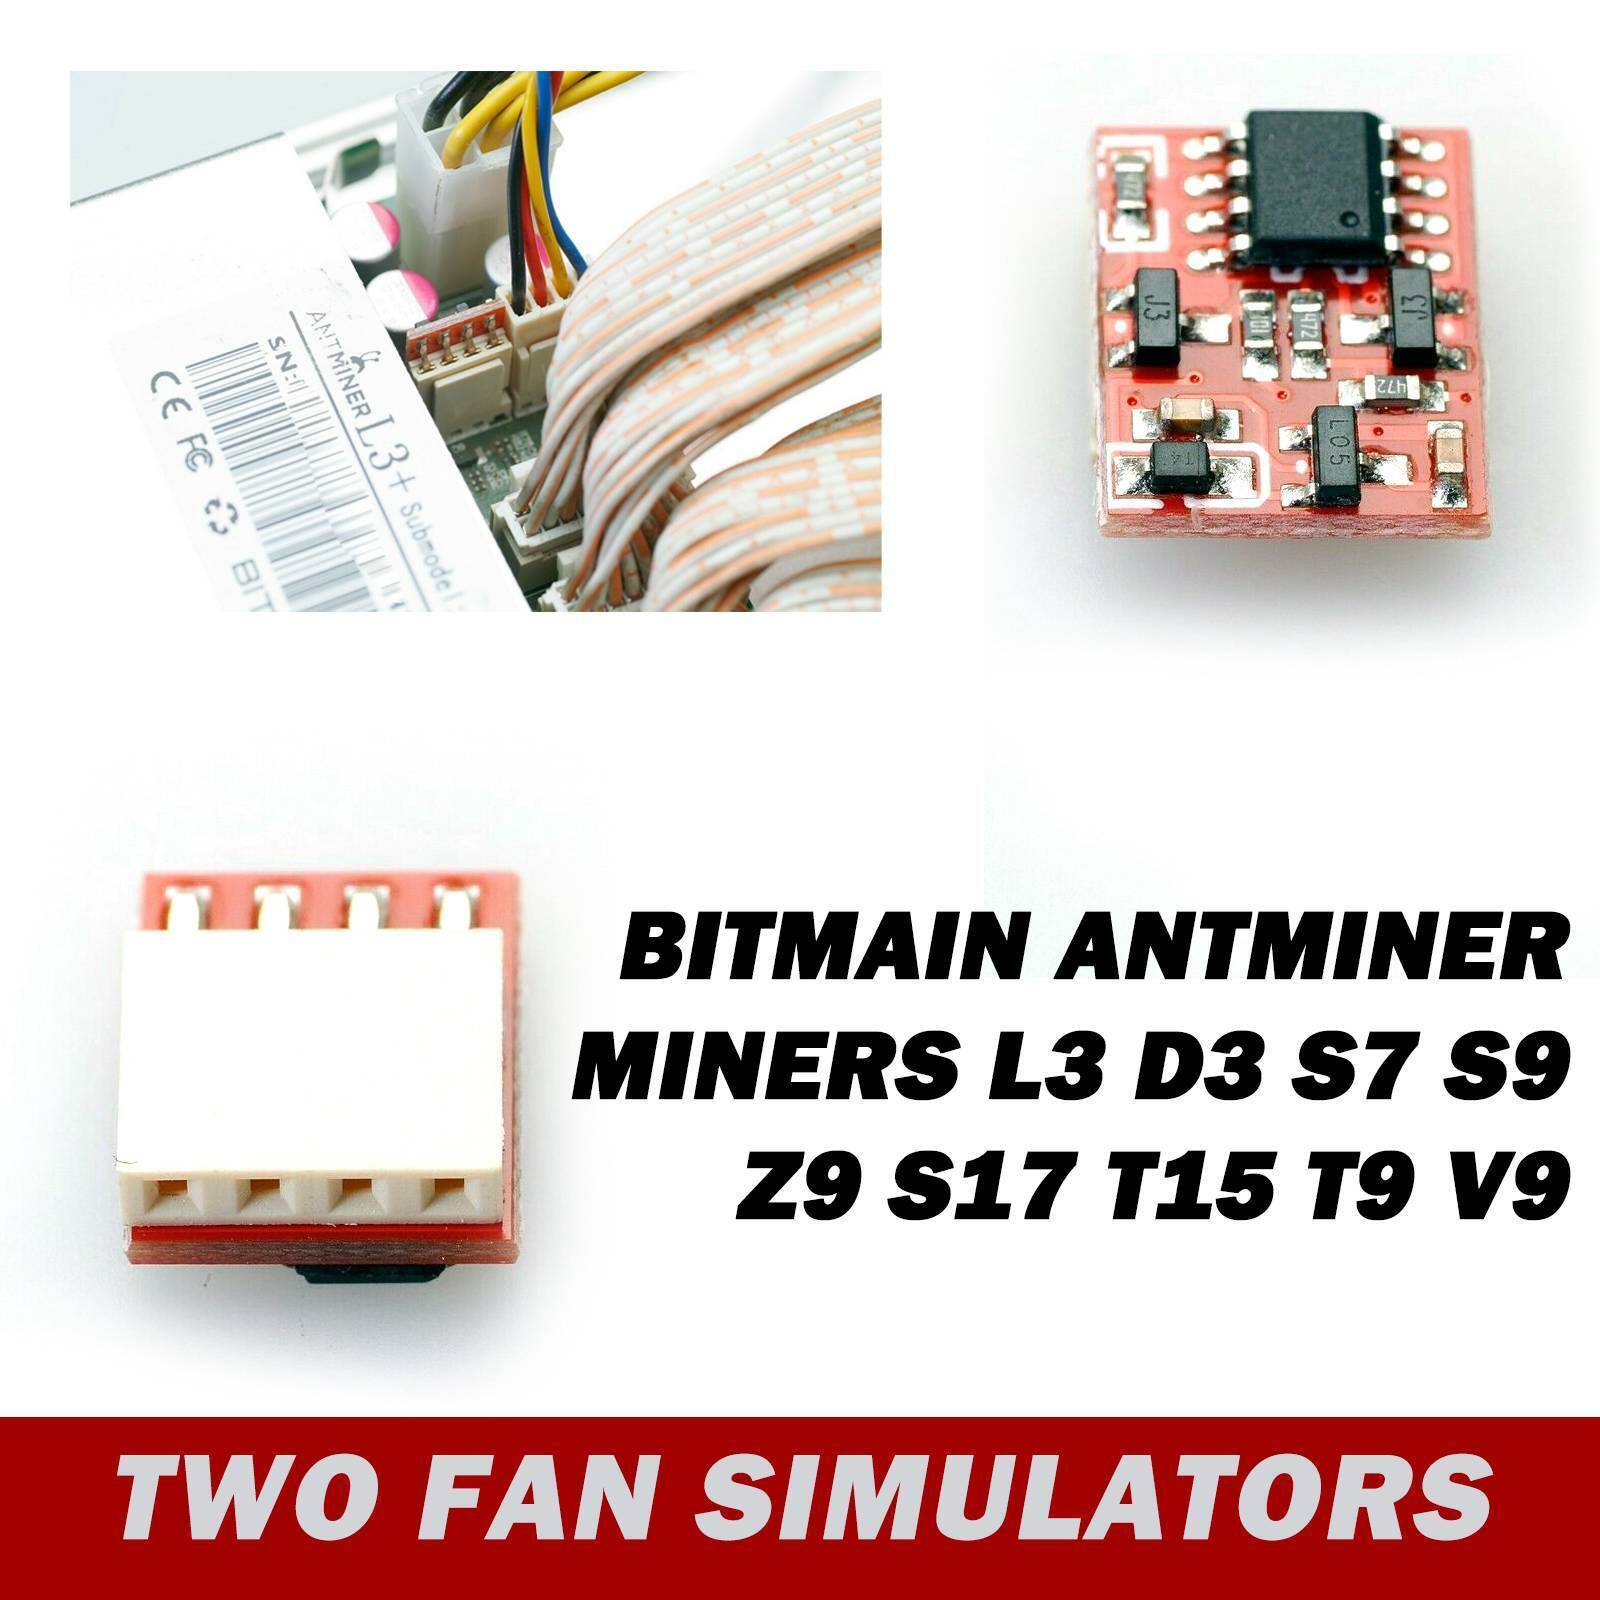 2Pcs Fan Simulators fit Bitmain Antminer Miner L3 D3 S7 S9 Z9 S17 T15 T9 V9 Unbranded Does not apply - фотография #9